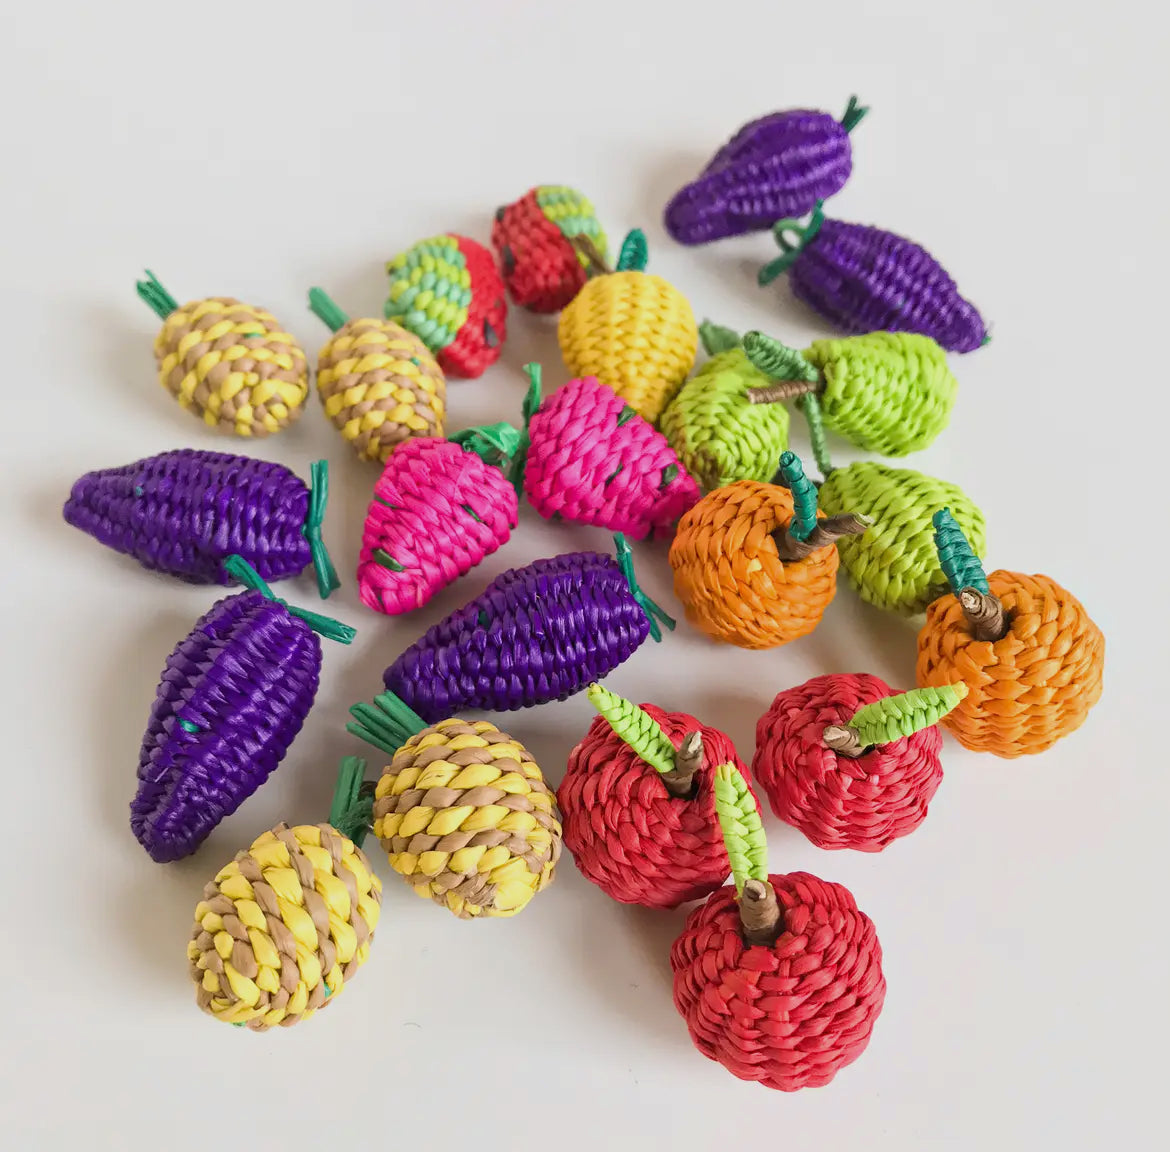 Mini Tres Frutas Earrings